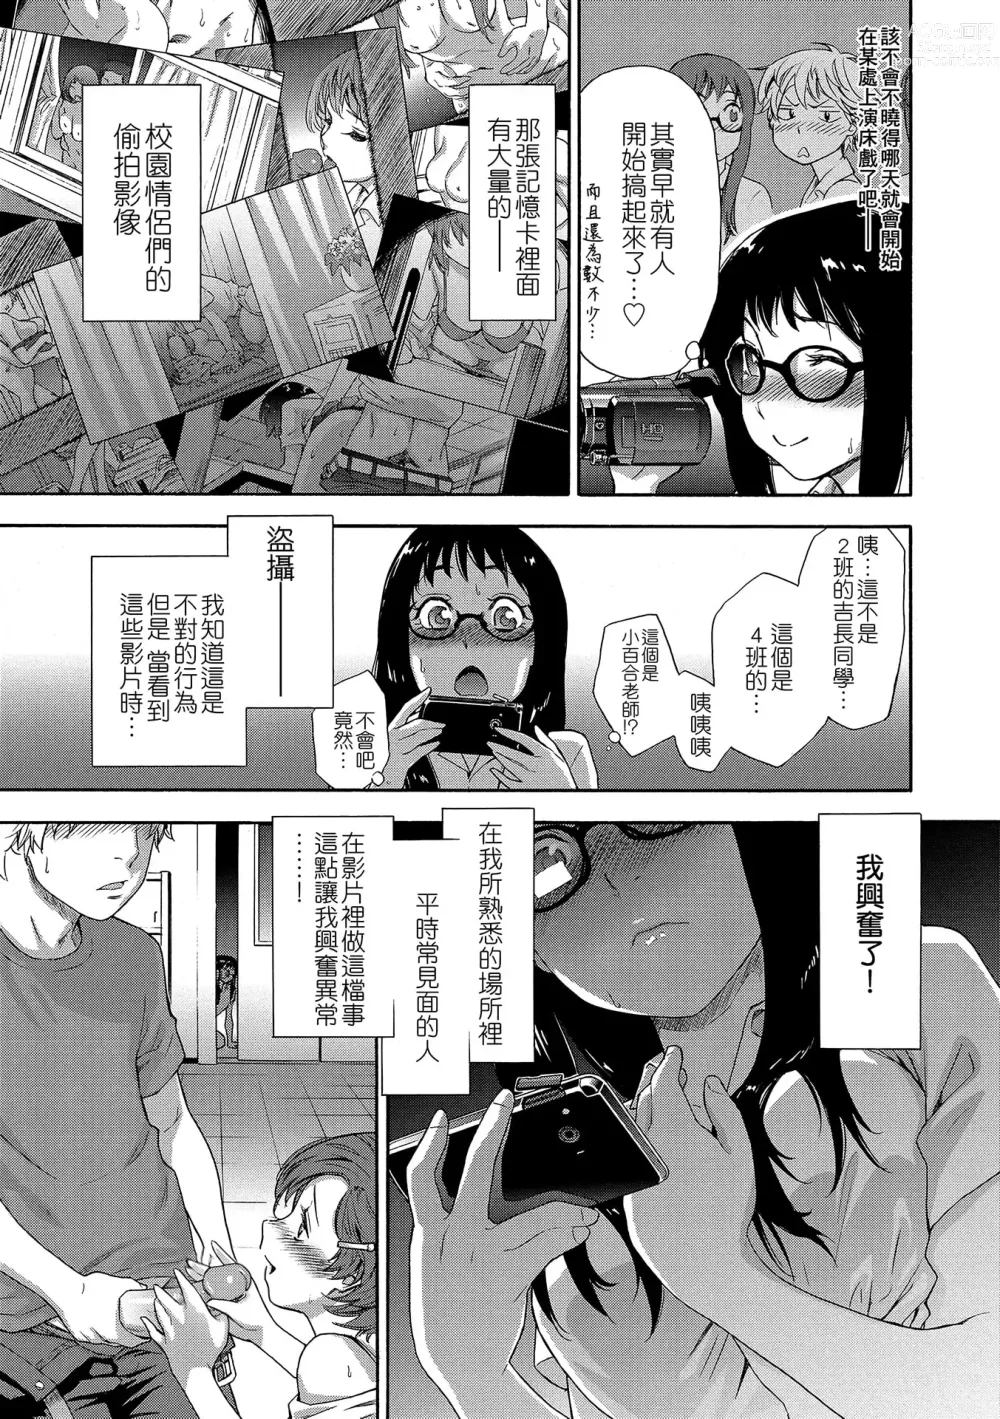 Page 11 of manga 甜美香濃的香草精華 (uncensored)